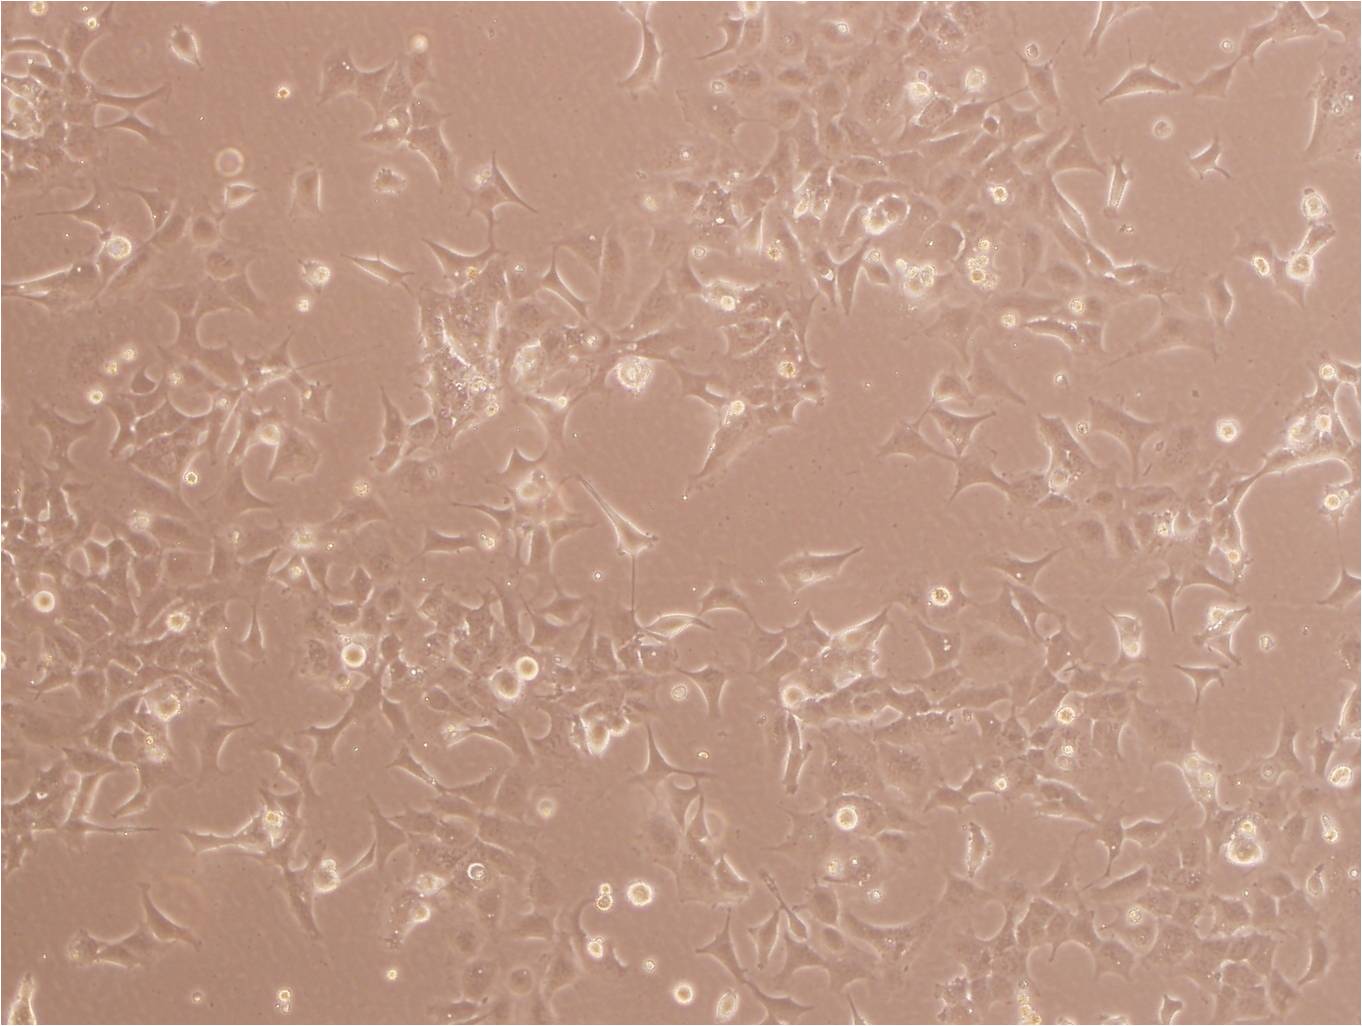 NCI-H1573 Cells|人肺癌腺癌细胞系,NCI-H1573 Cells